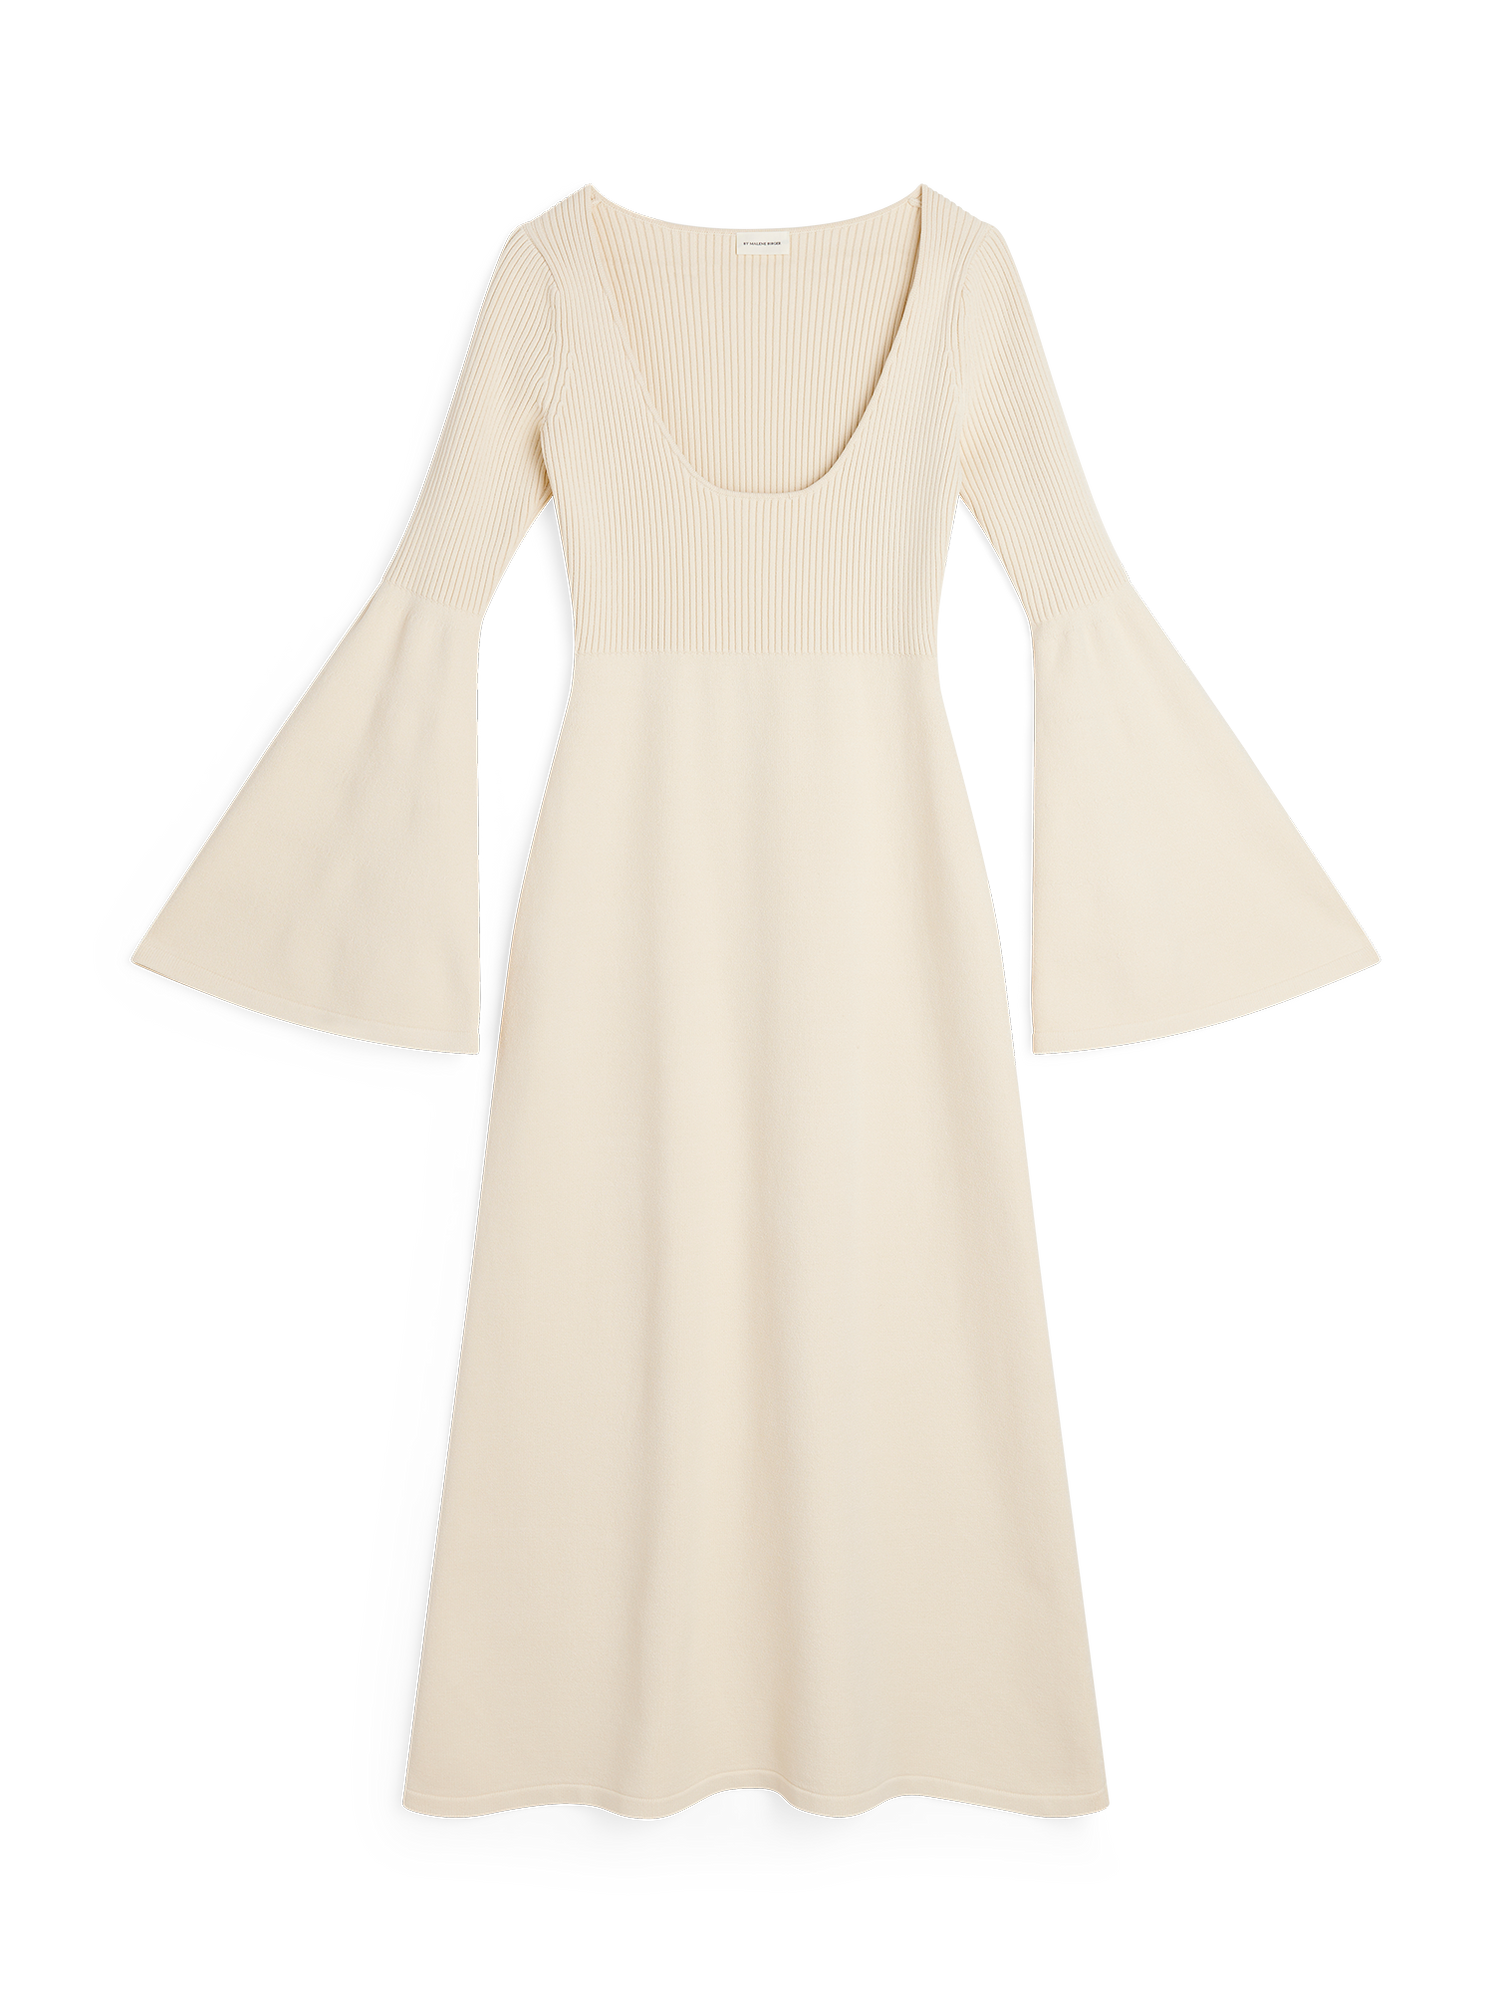 ELYSIA  knitted dress, soft white